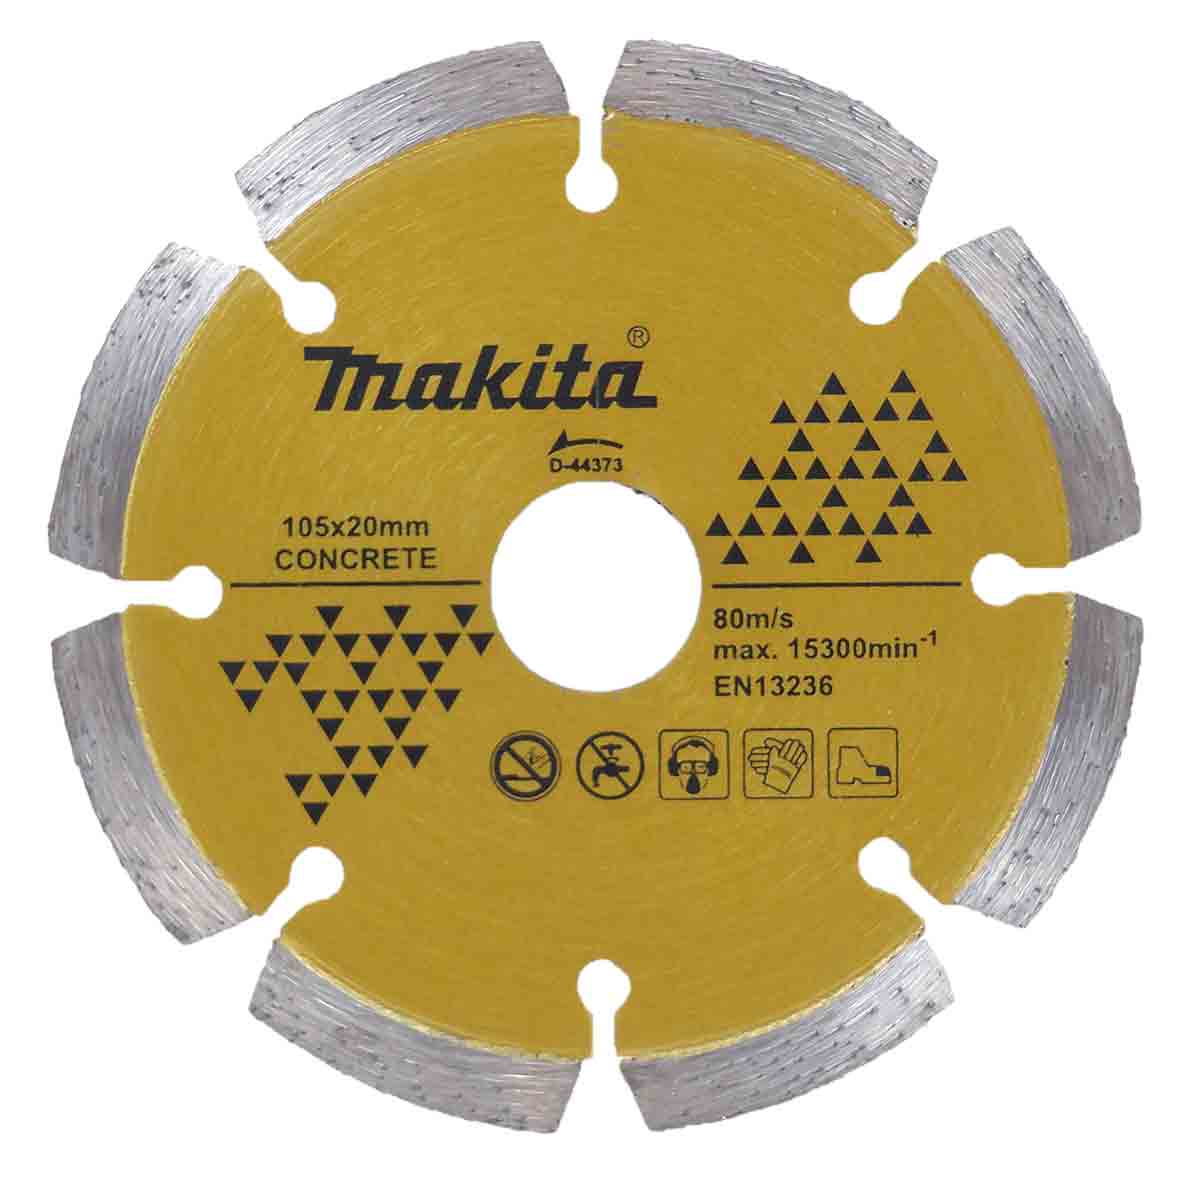 Сегмент стандарт. Makita Diamond Wheels d-05196. Diamond Concrete. Distar 500mm Home 25.4 max3050 Max 80 m/s асфальт свежий бетон цена.